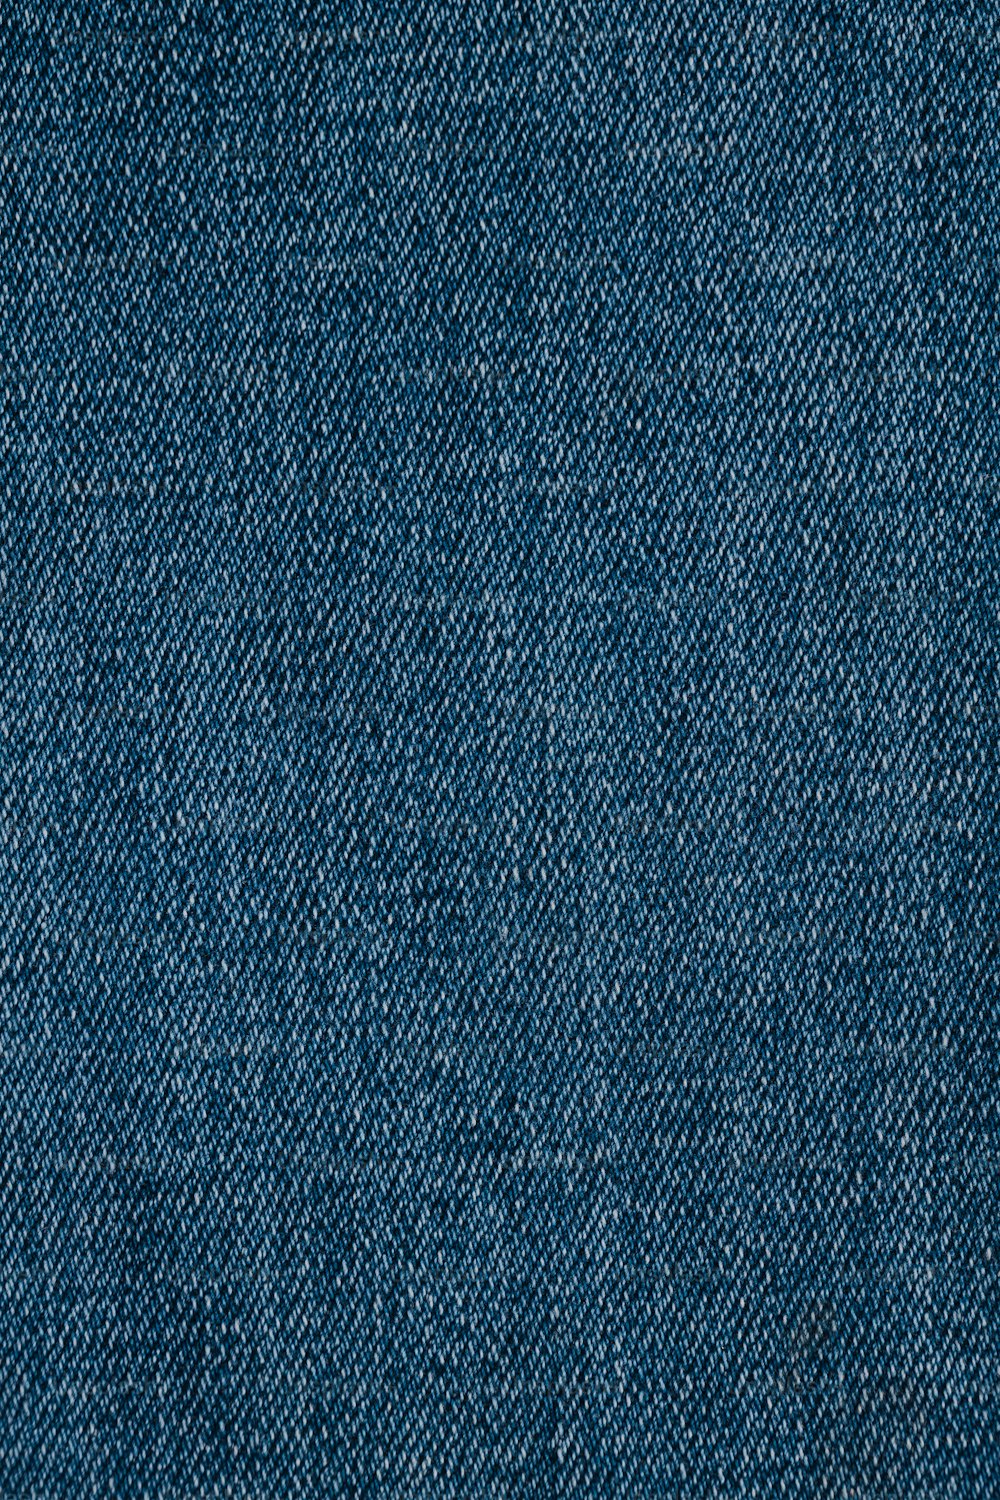 a close up of a blue denim fabric texture